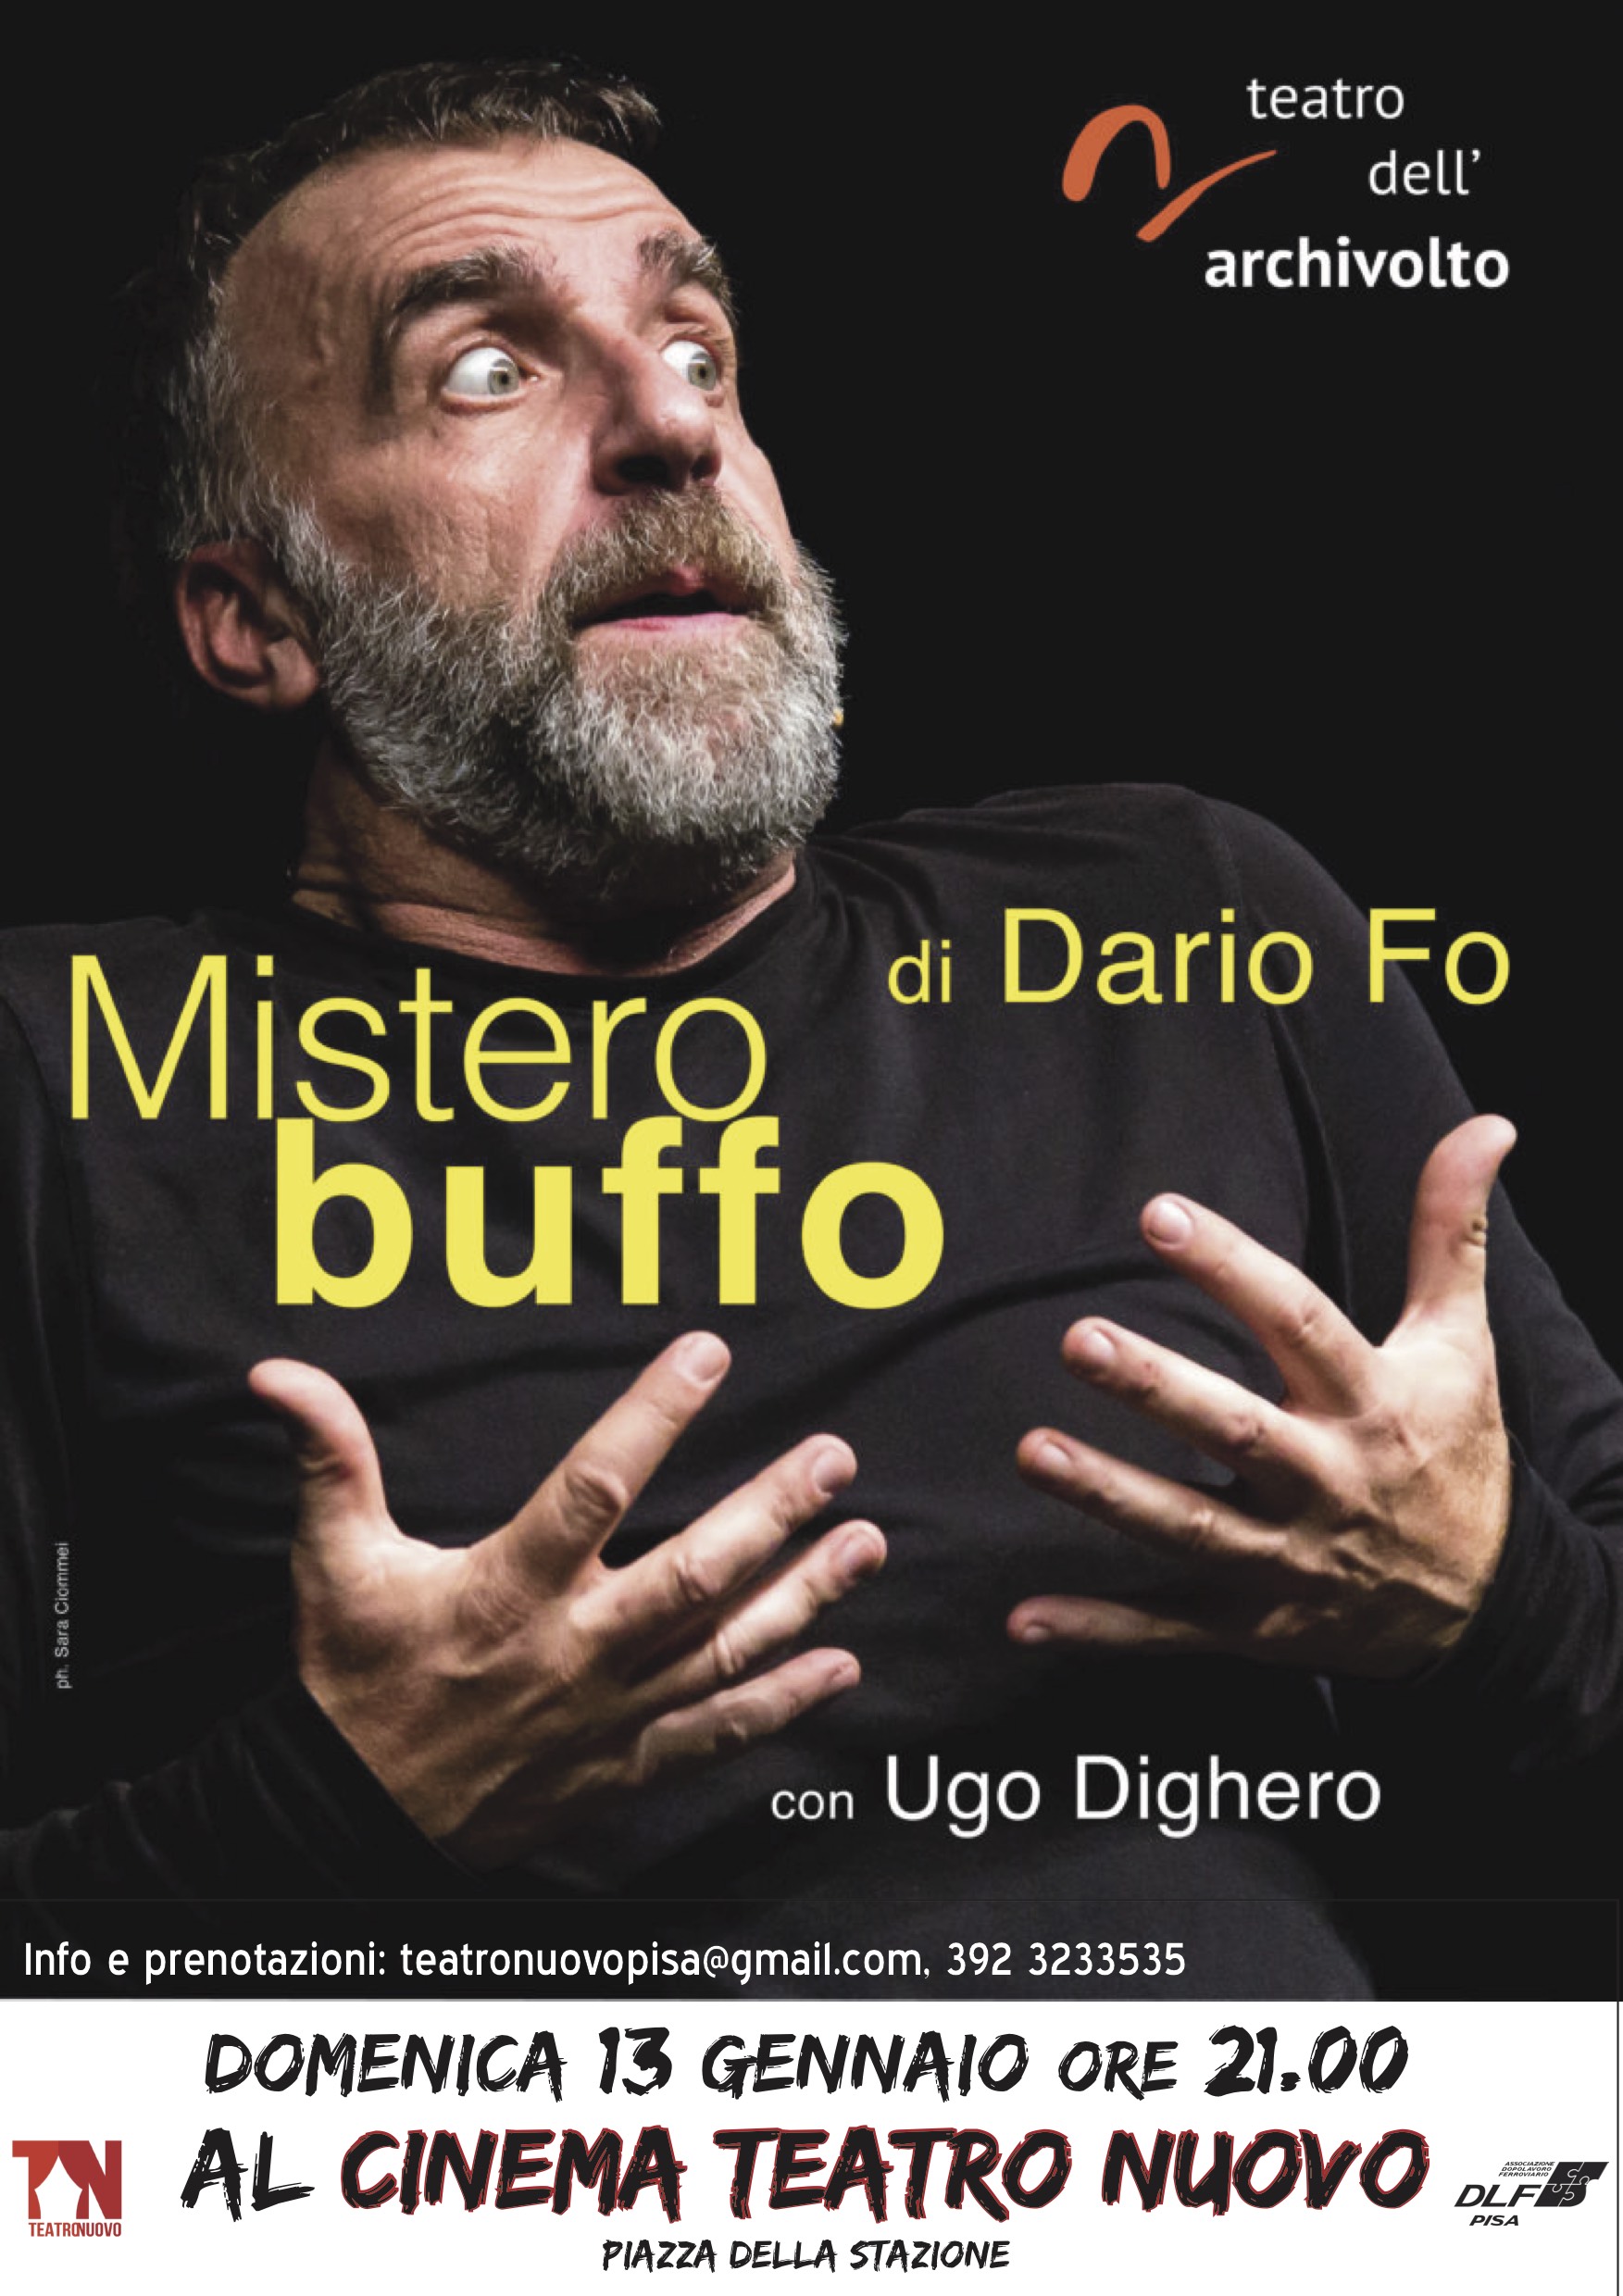 MISTERO BUFFO con Ugo Dighero